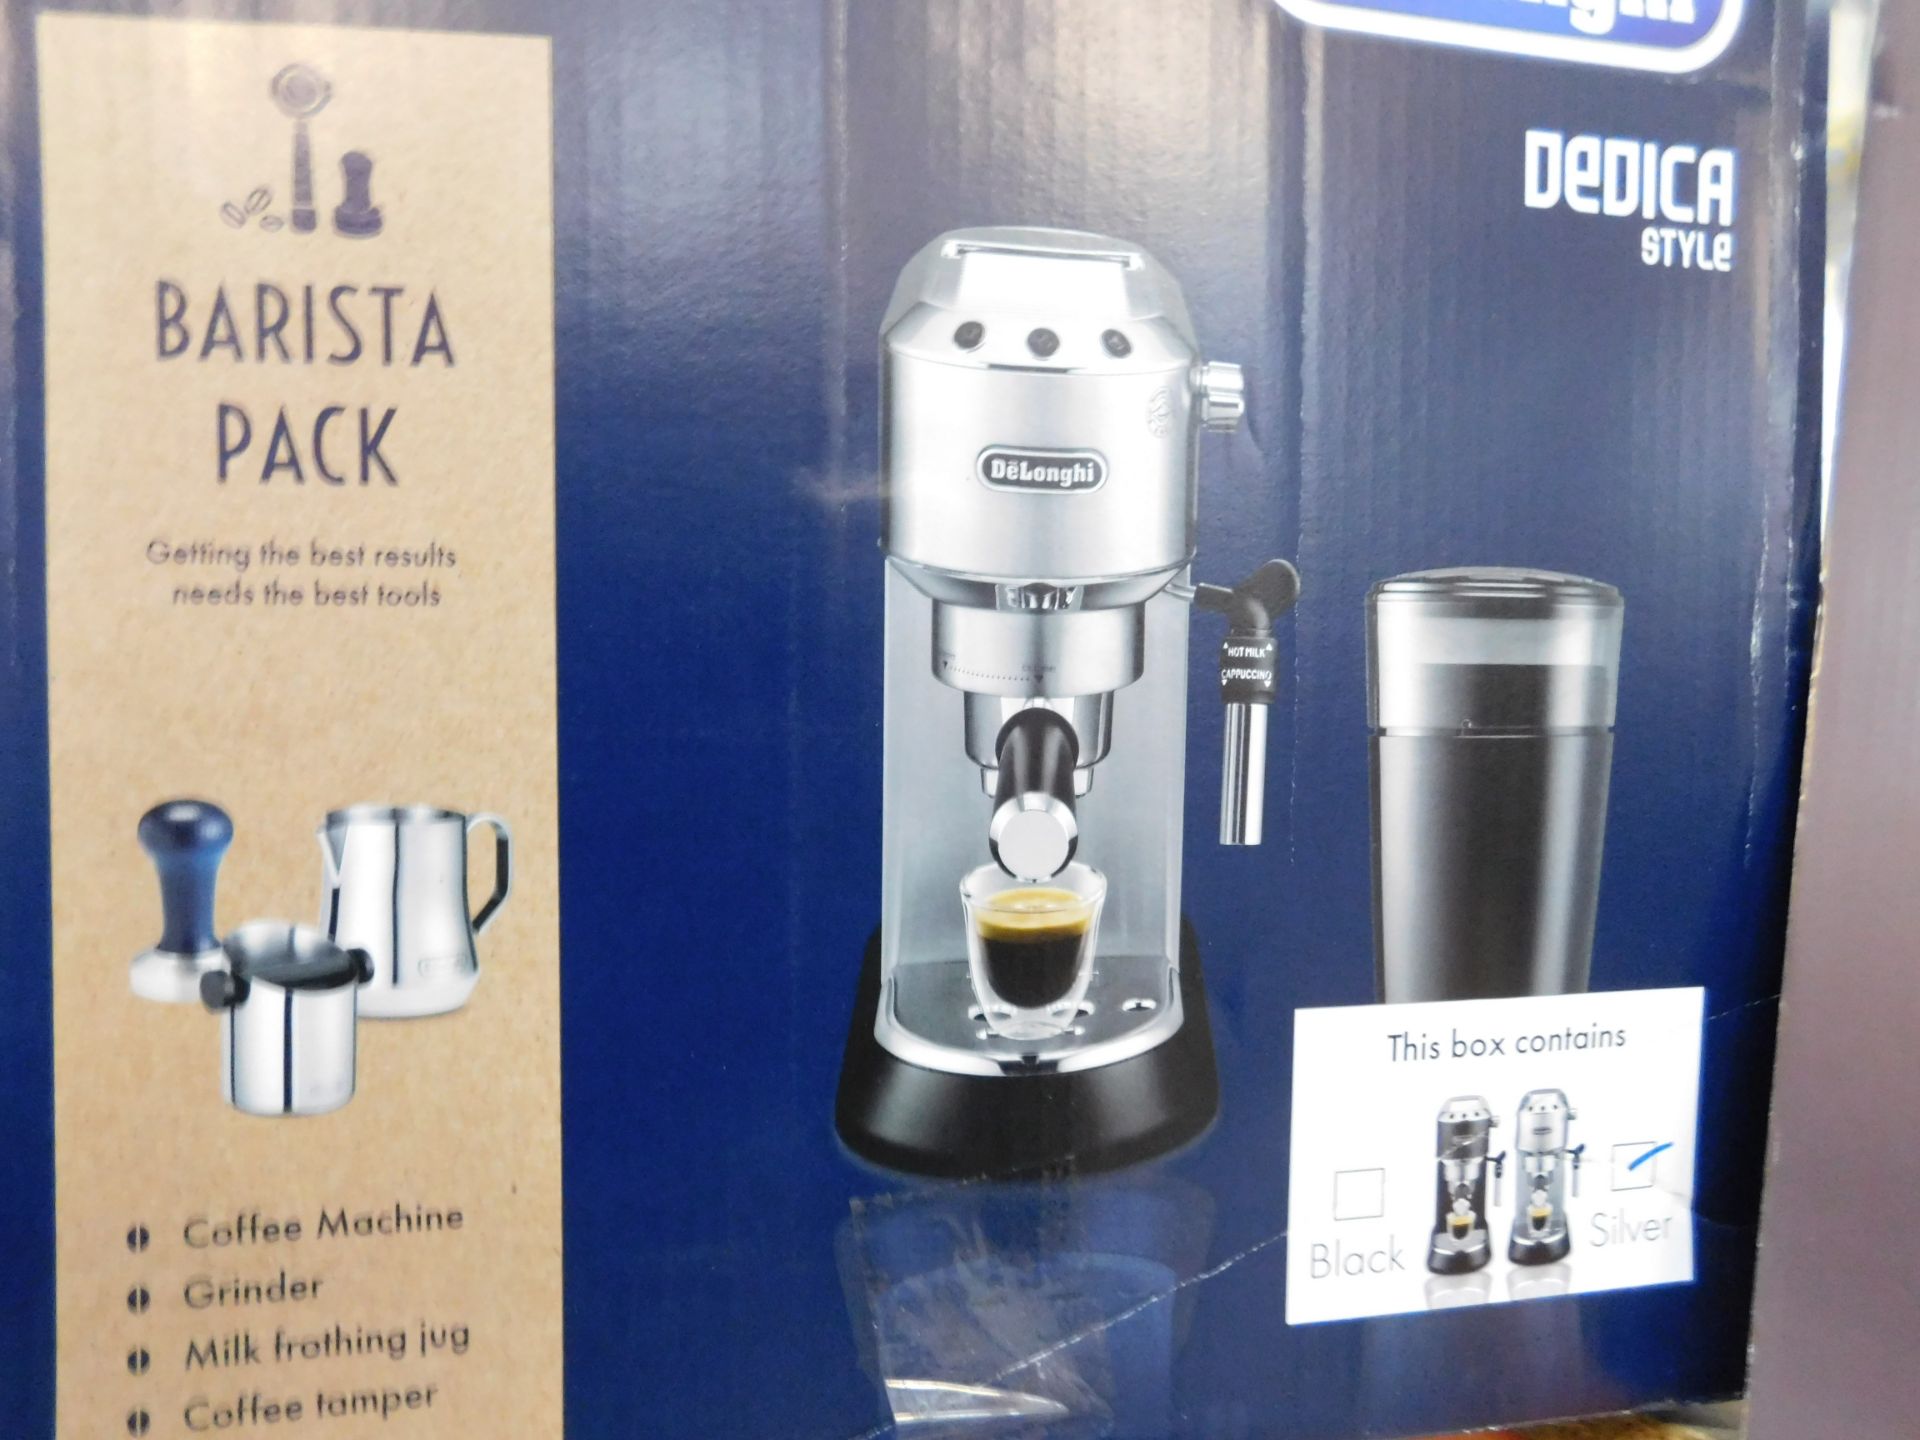 1 BOXED DE'LONGHI DEDICA BARISTA COFFEE MACHINE BUNDLE PACK SILVER ECKG6820 RRP Â£299